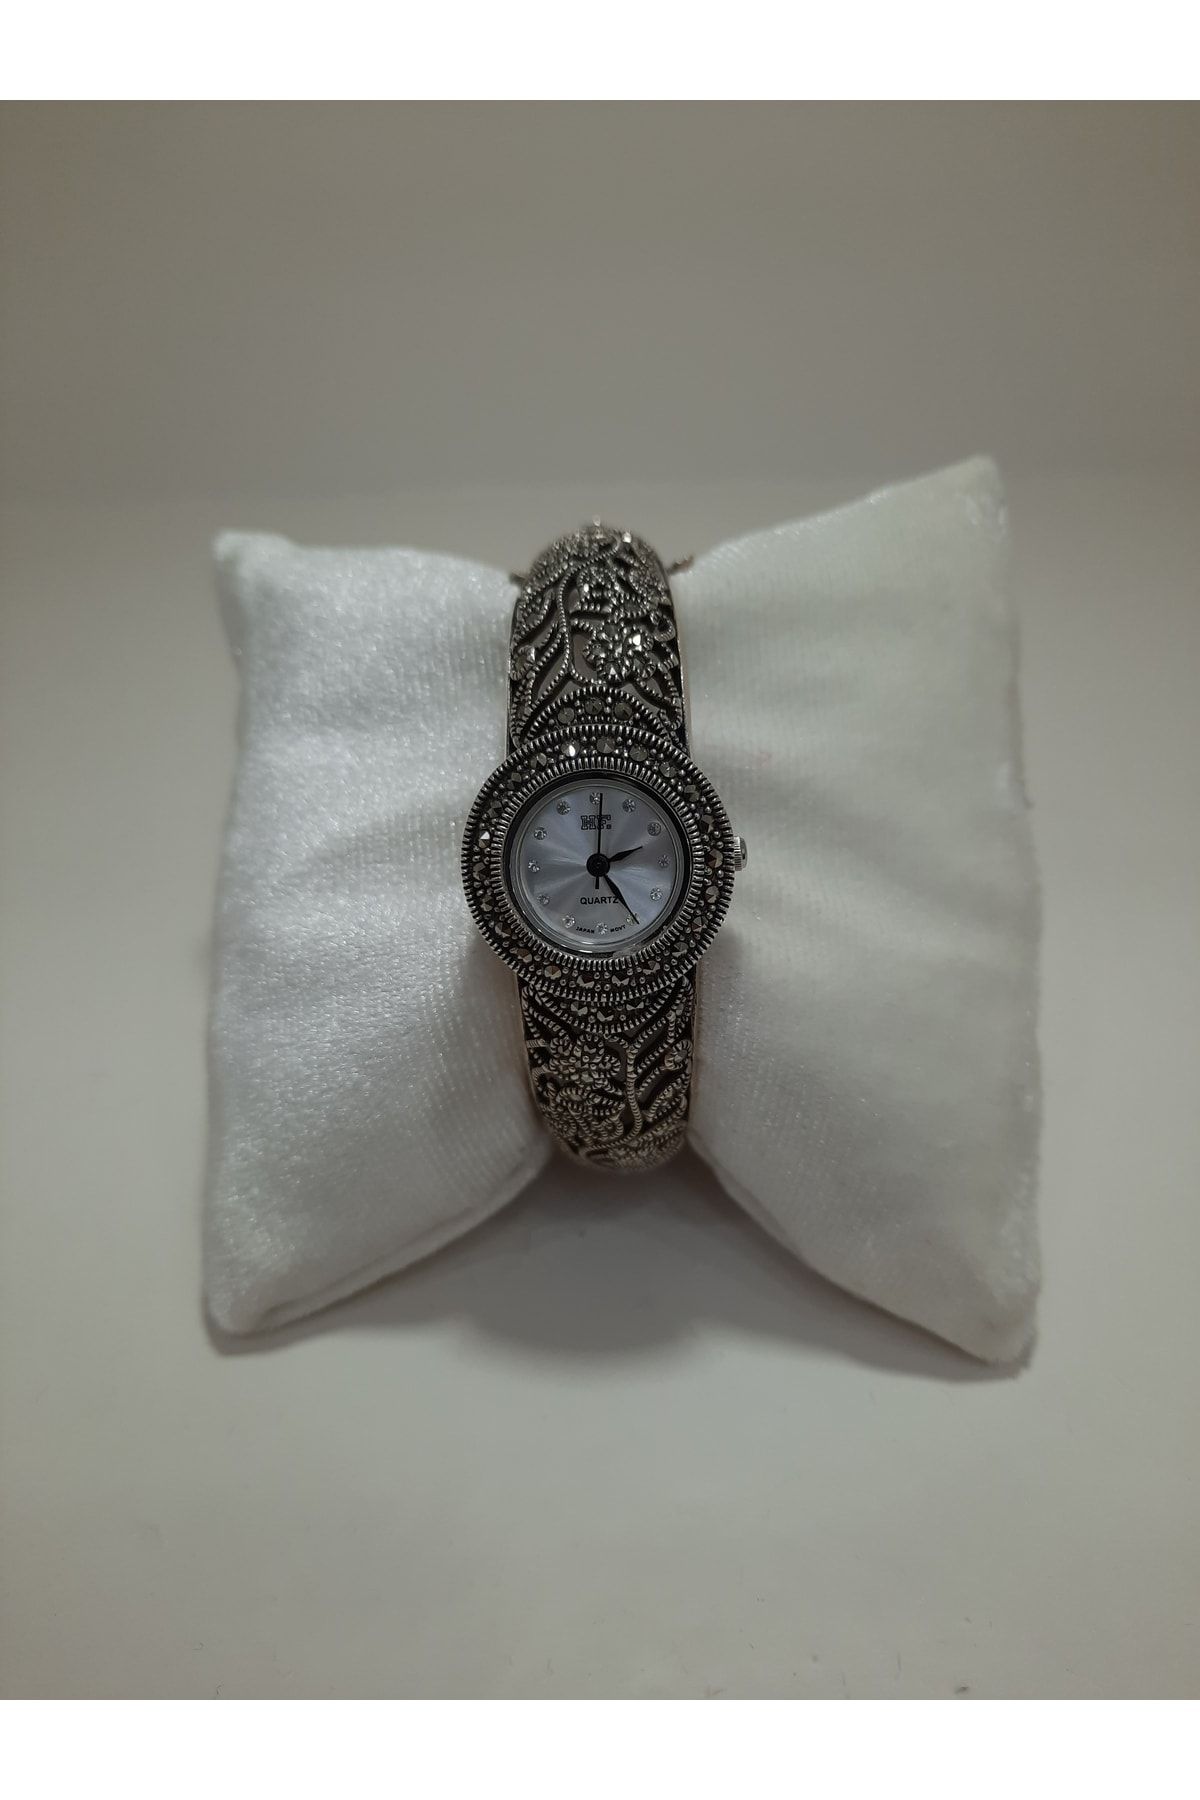 2022 Luxury LED Watch Women Rose Gold Metal Chain Strap Ladies Wristwatch  Girls Digital Electronic Clock relogio feminino reloj